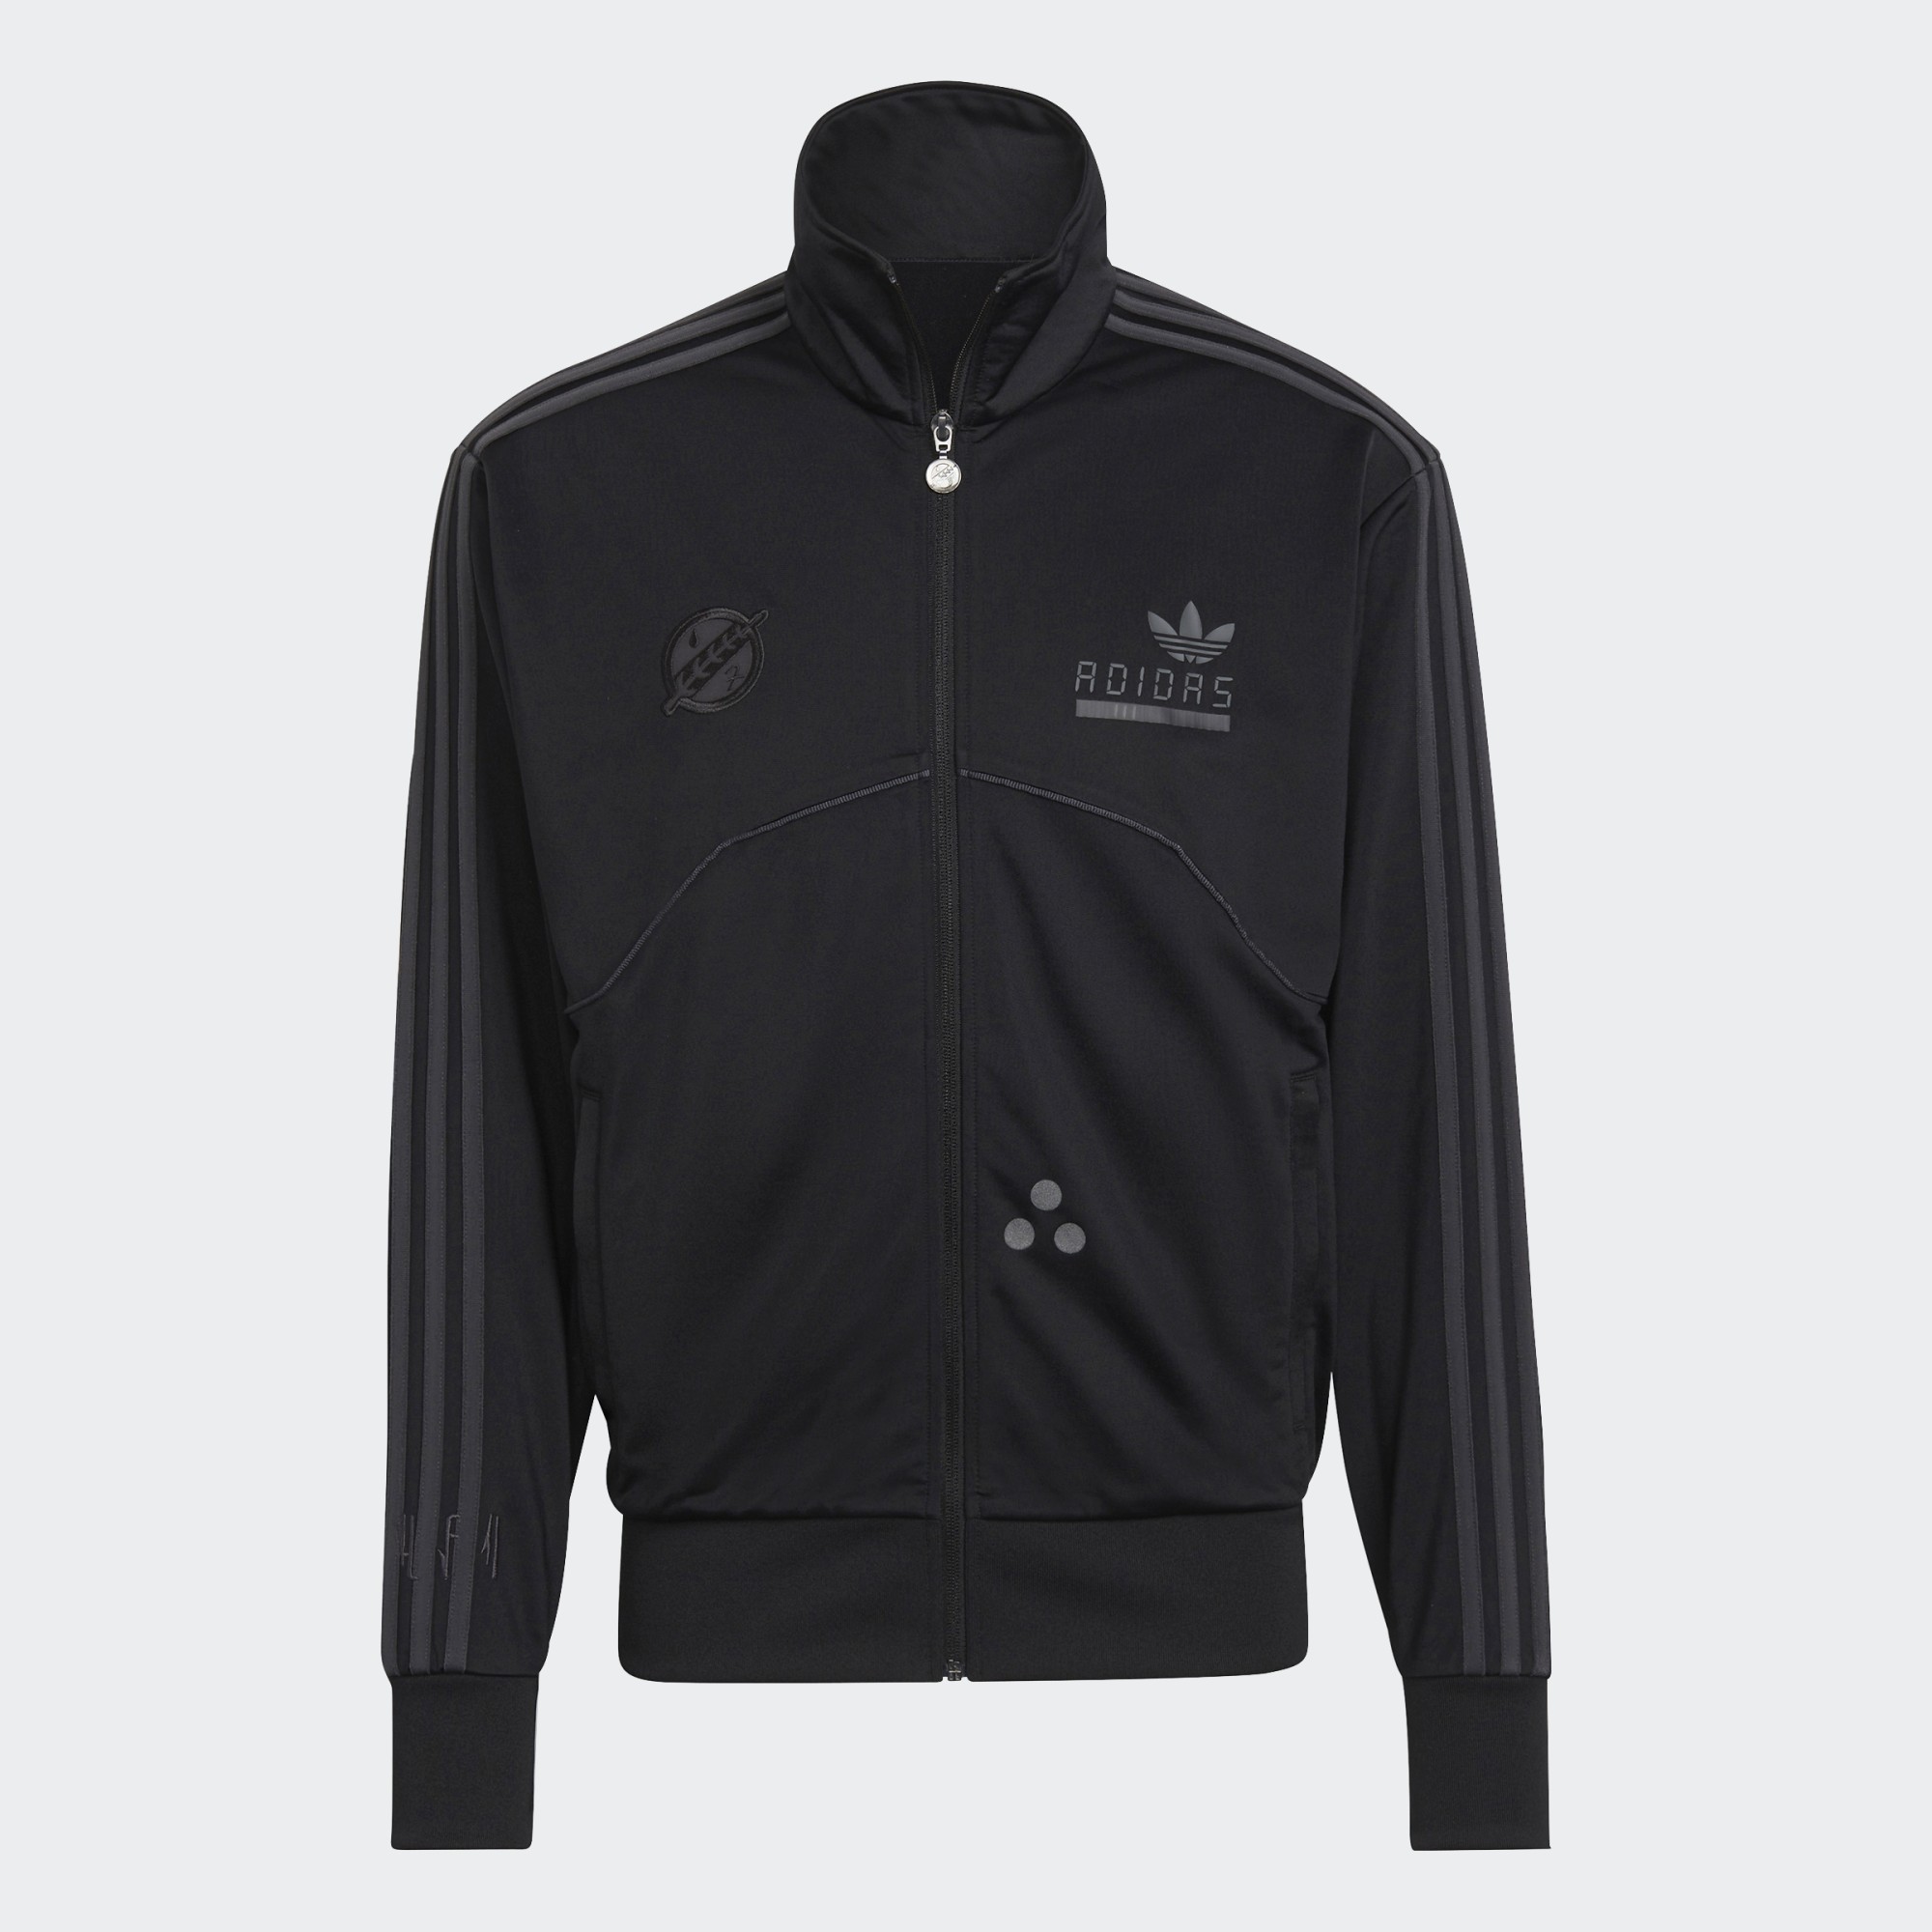 Firebird track jacket, Adidas